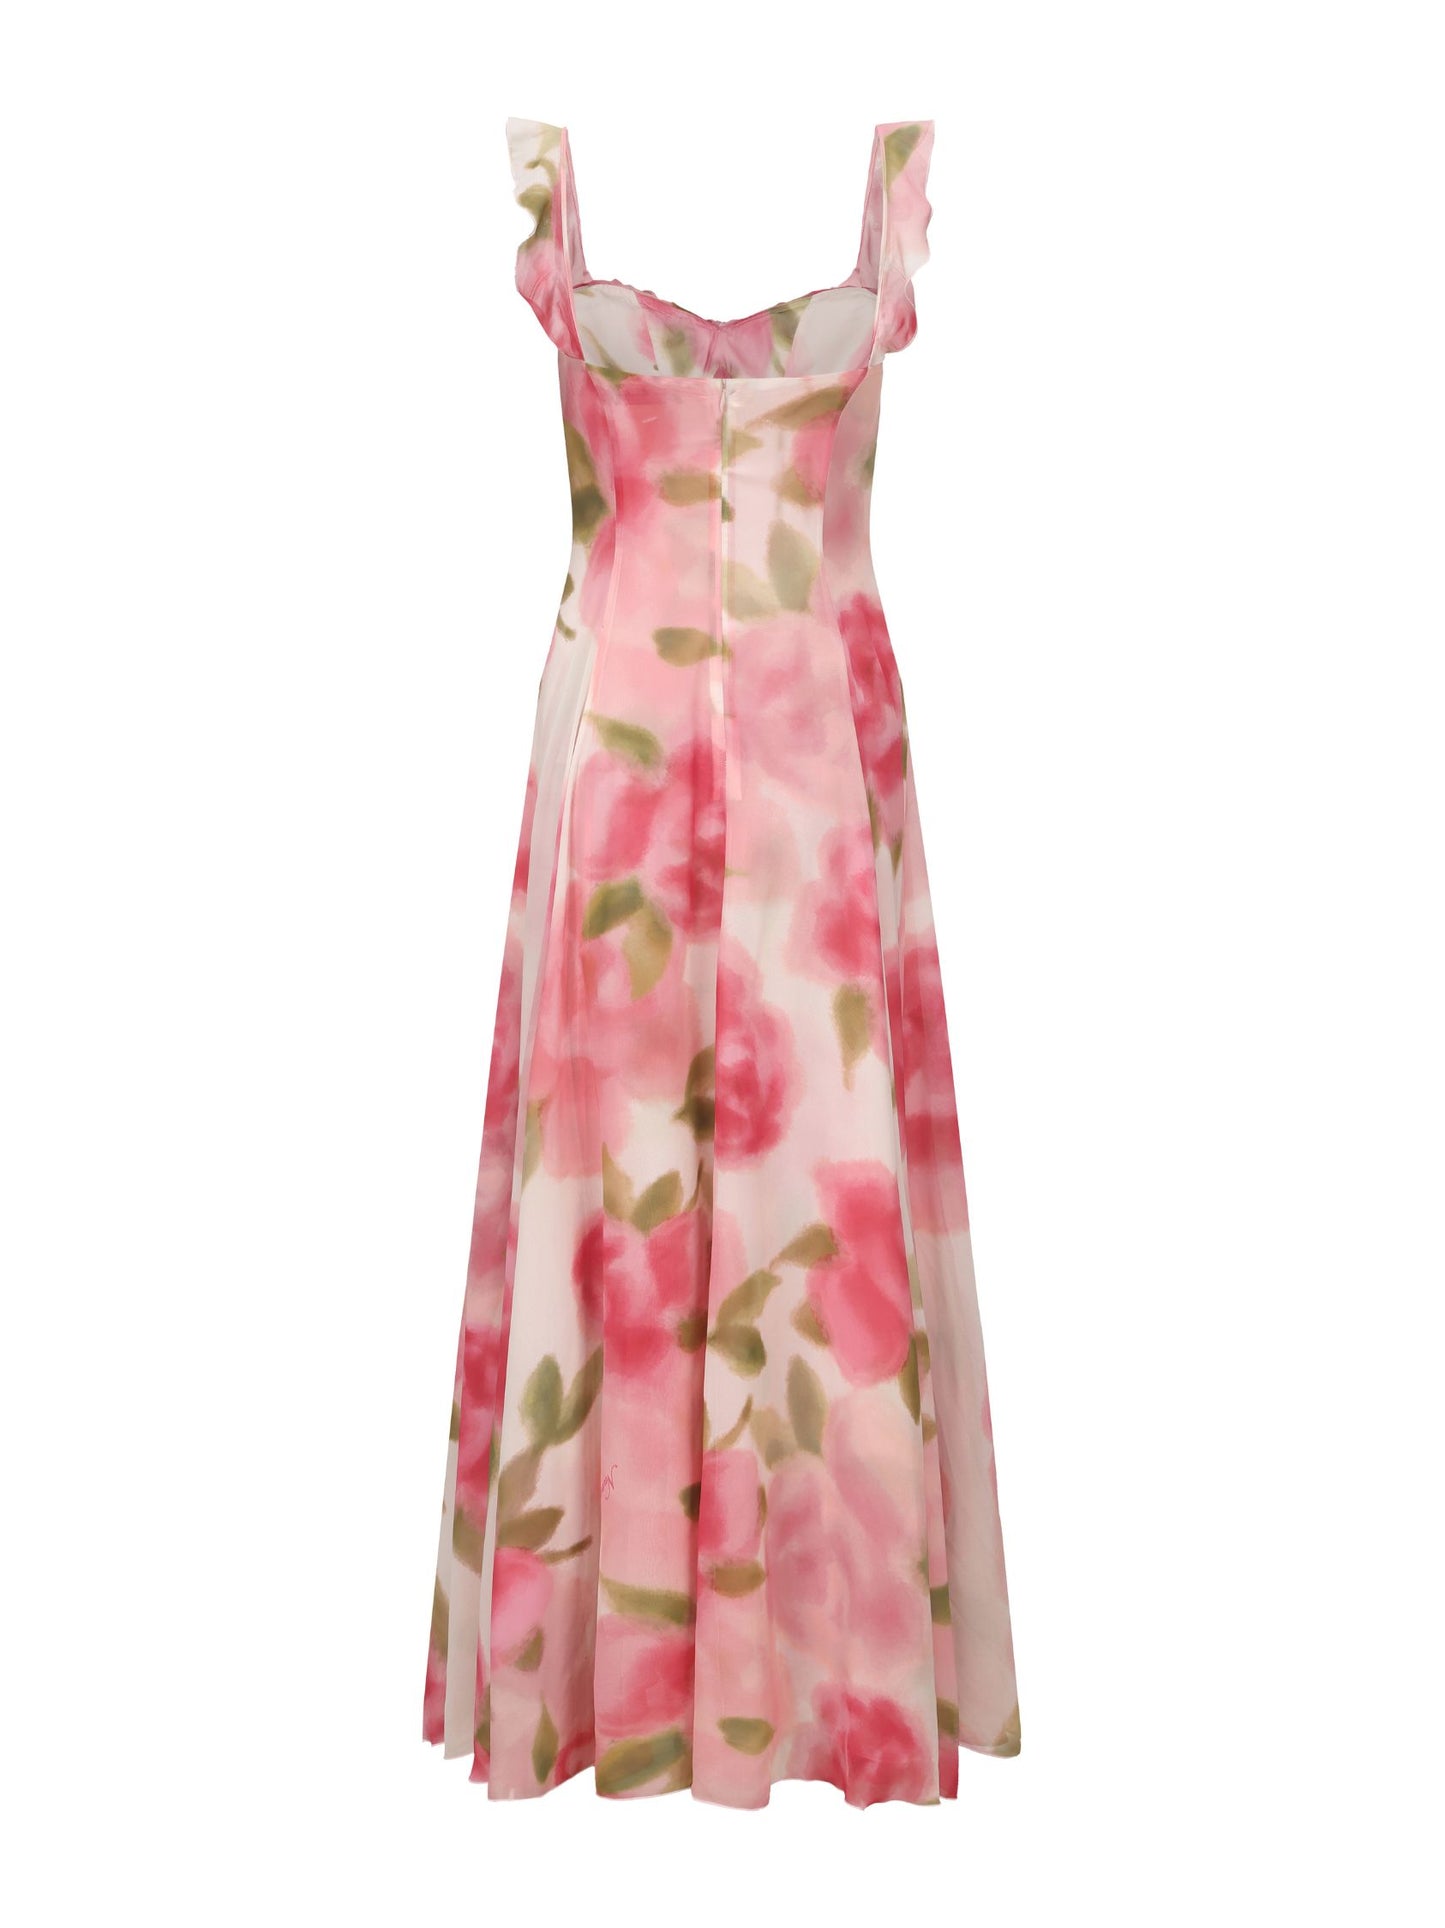 Evie Dress (Floral)